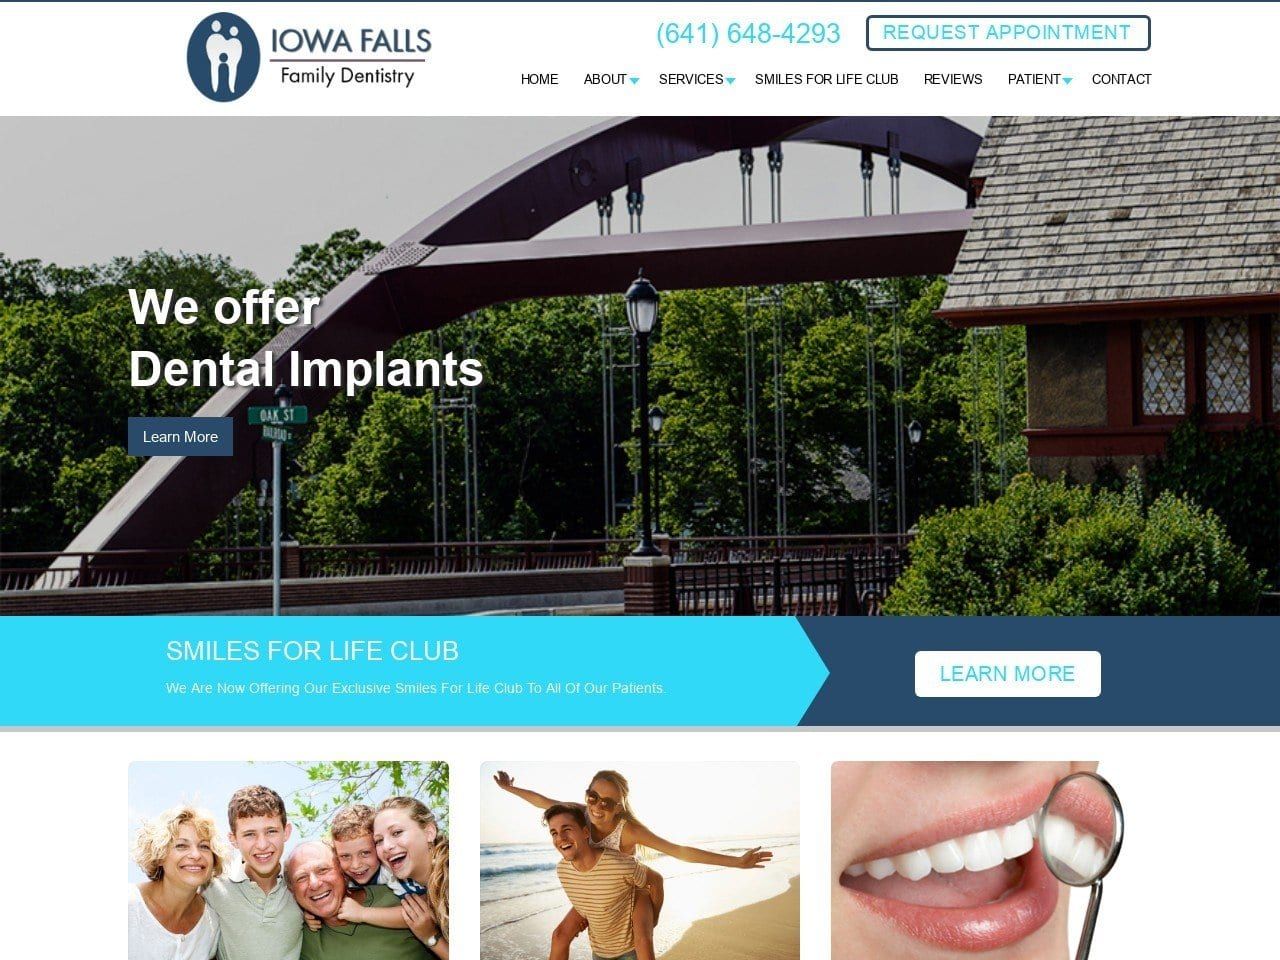 Iowa Falls Family Dentist Website Screenshot from iffamilydentistry.com